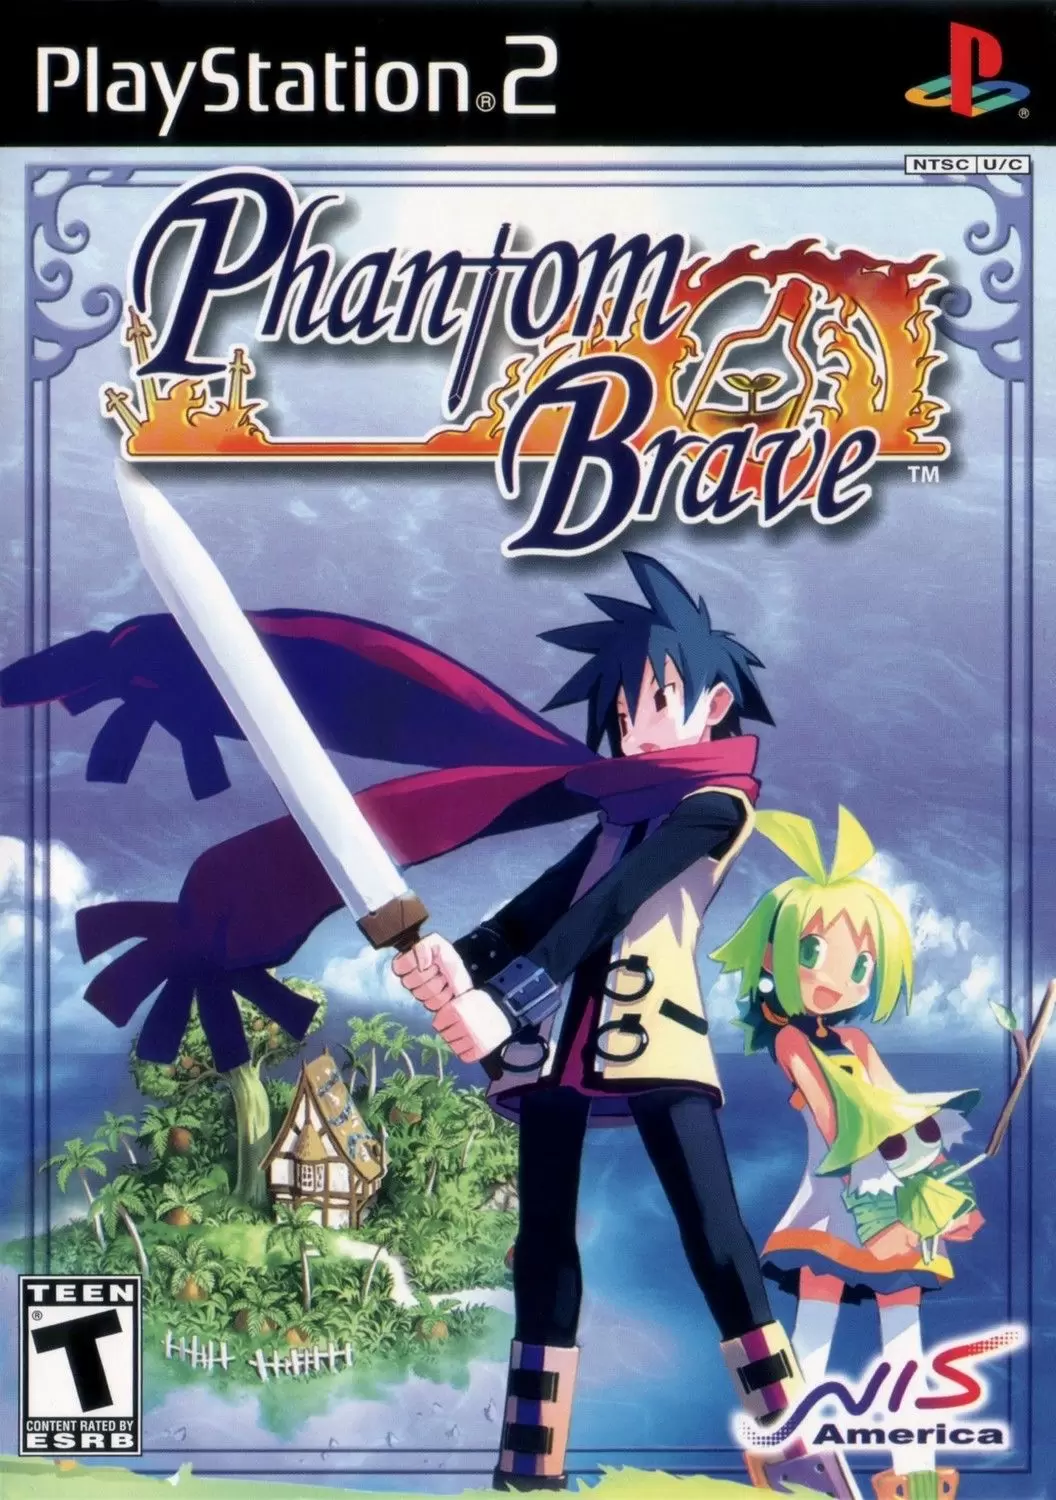 PS2 Games - Phantom Brave